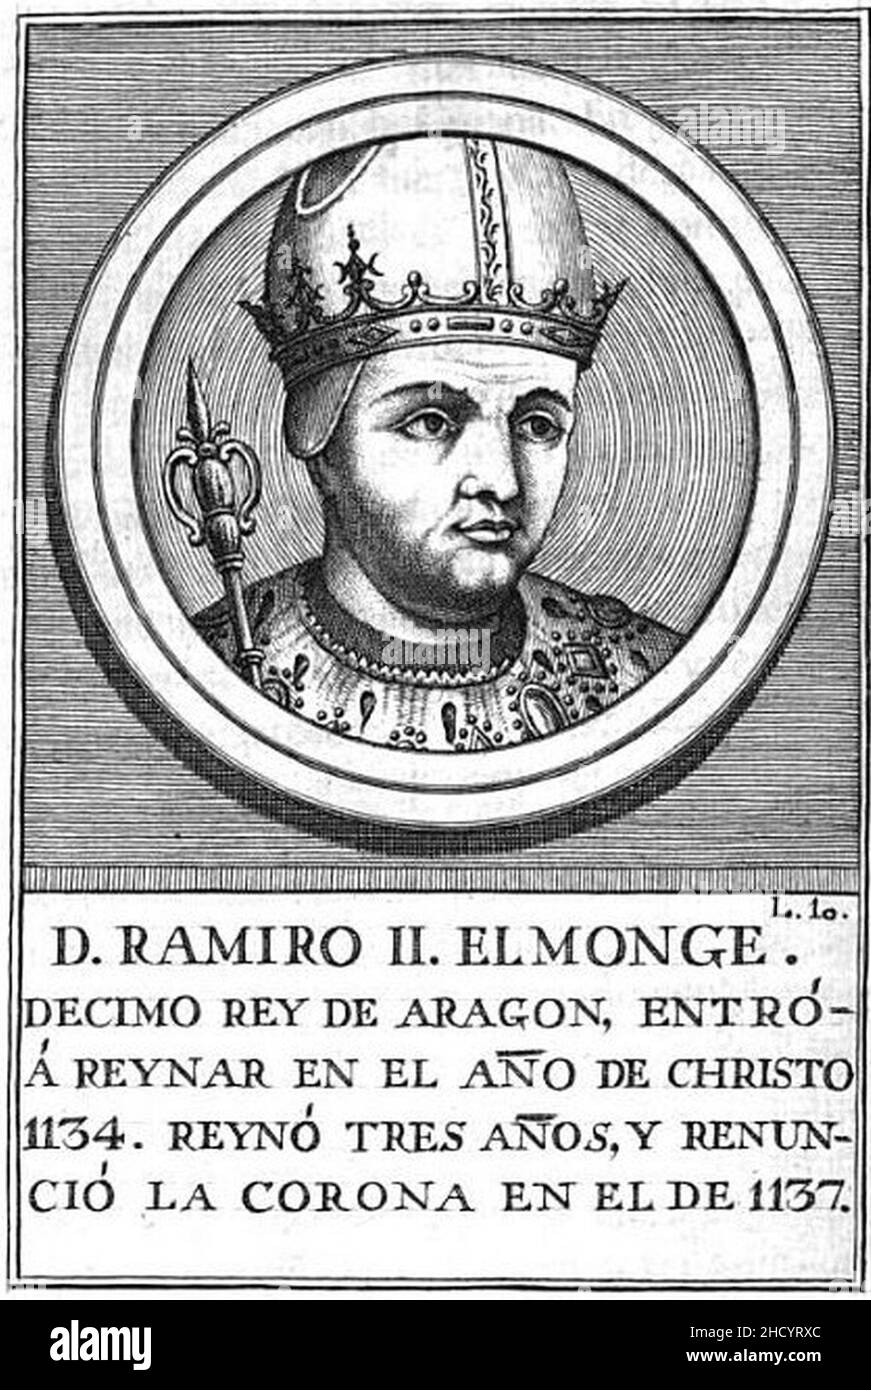 Retrito-104-Rey de Aragón-Ramiro II el Monje. Banque D'Images